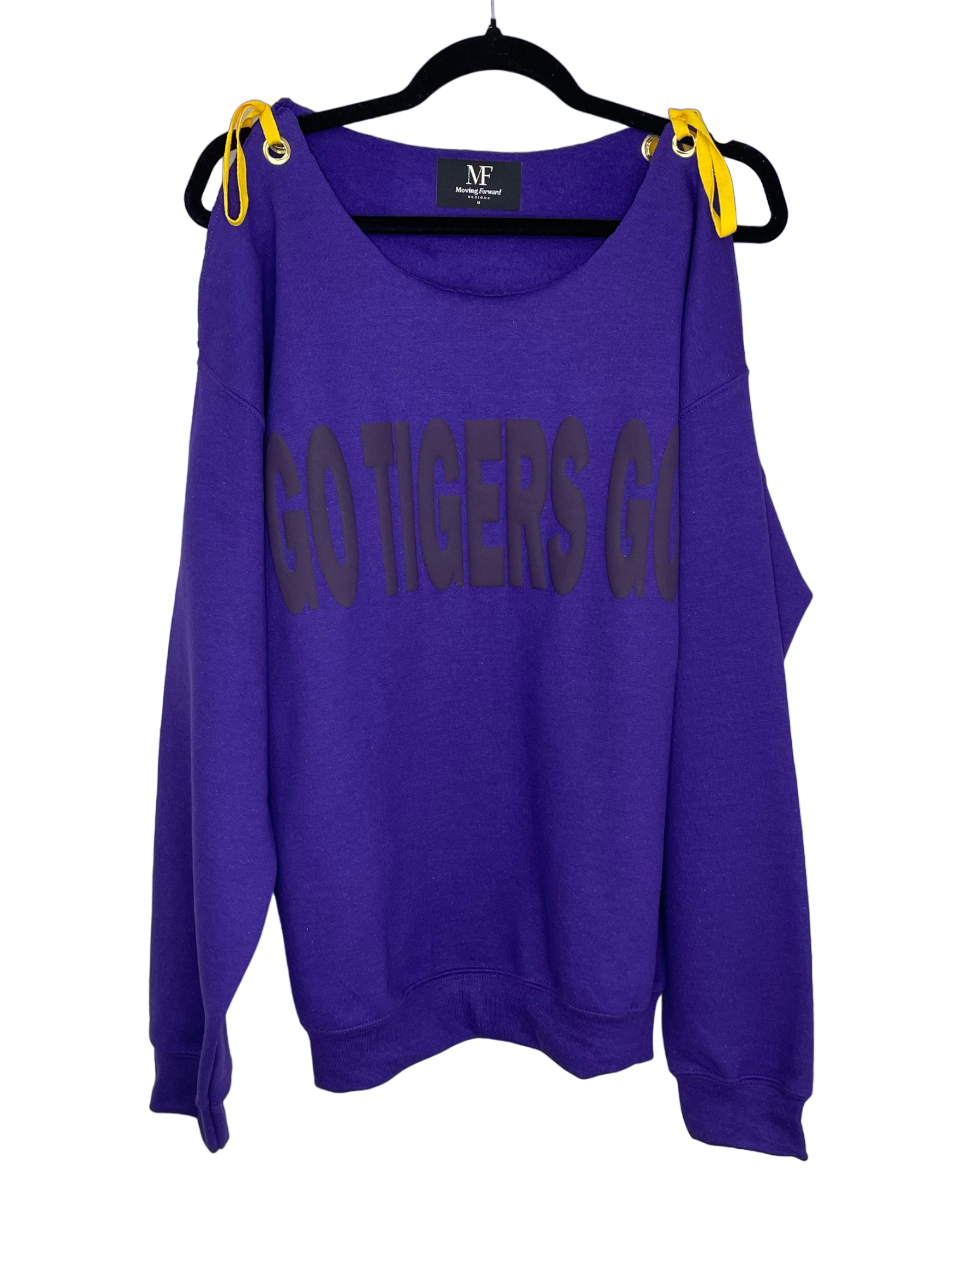 Game Day Sweatshirt, Crewneck Purple, Go Tigers Go w/ Yellow Ties